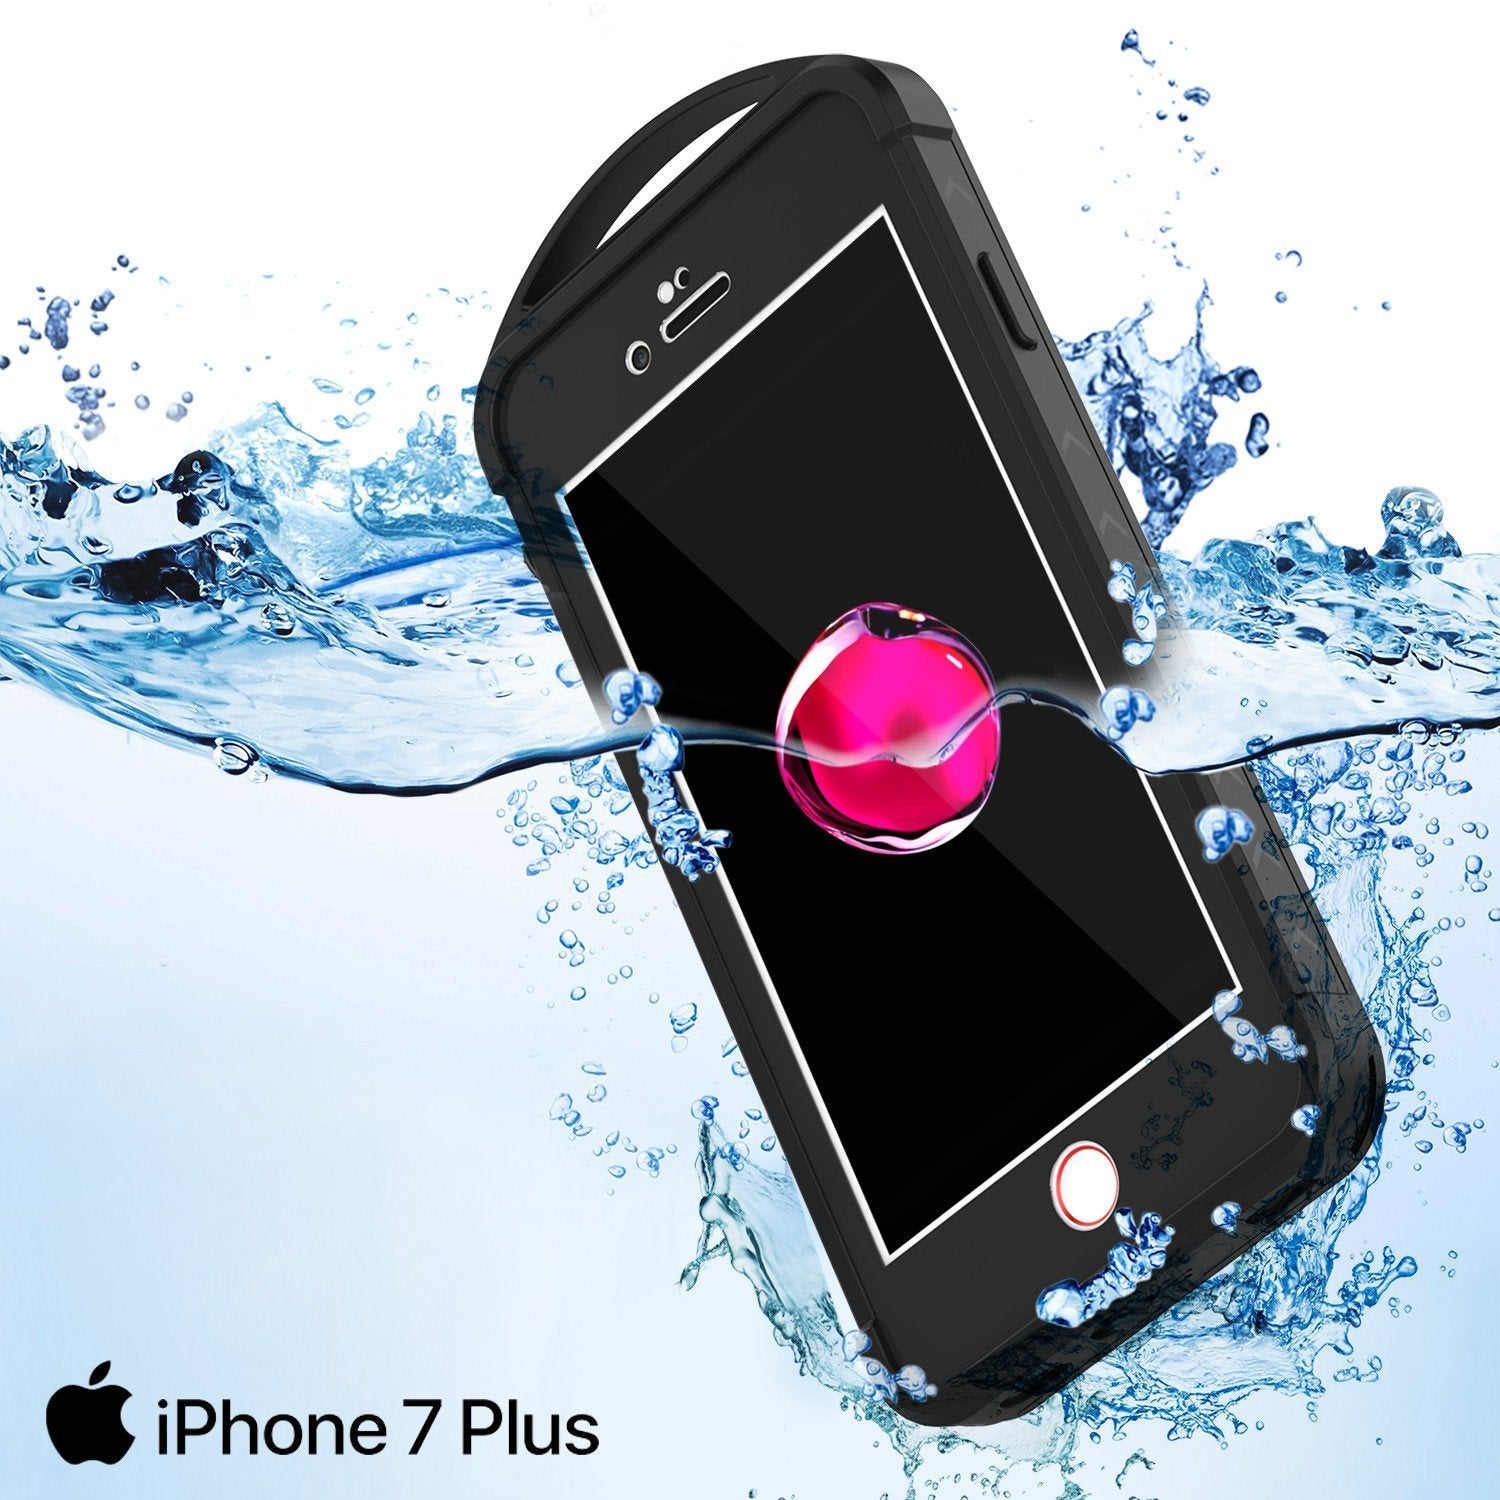 iPhone 8+ Plus Waterproof Case, Punkcase ALPINE Series, Black | Heavy Duty Armor Cover